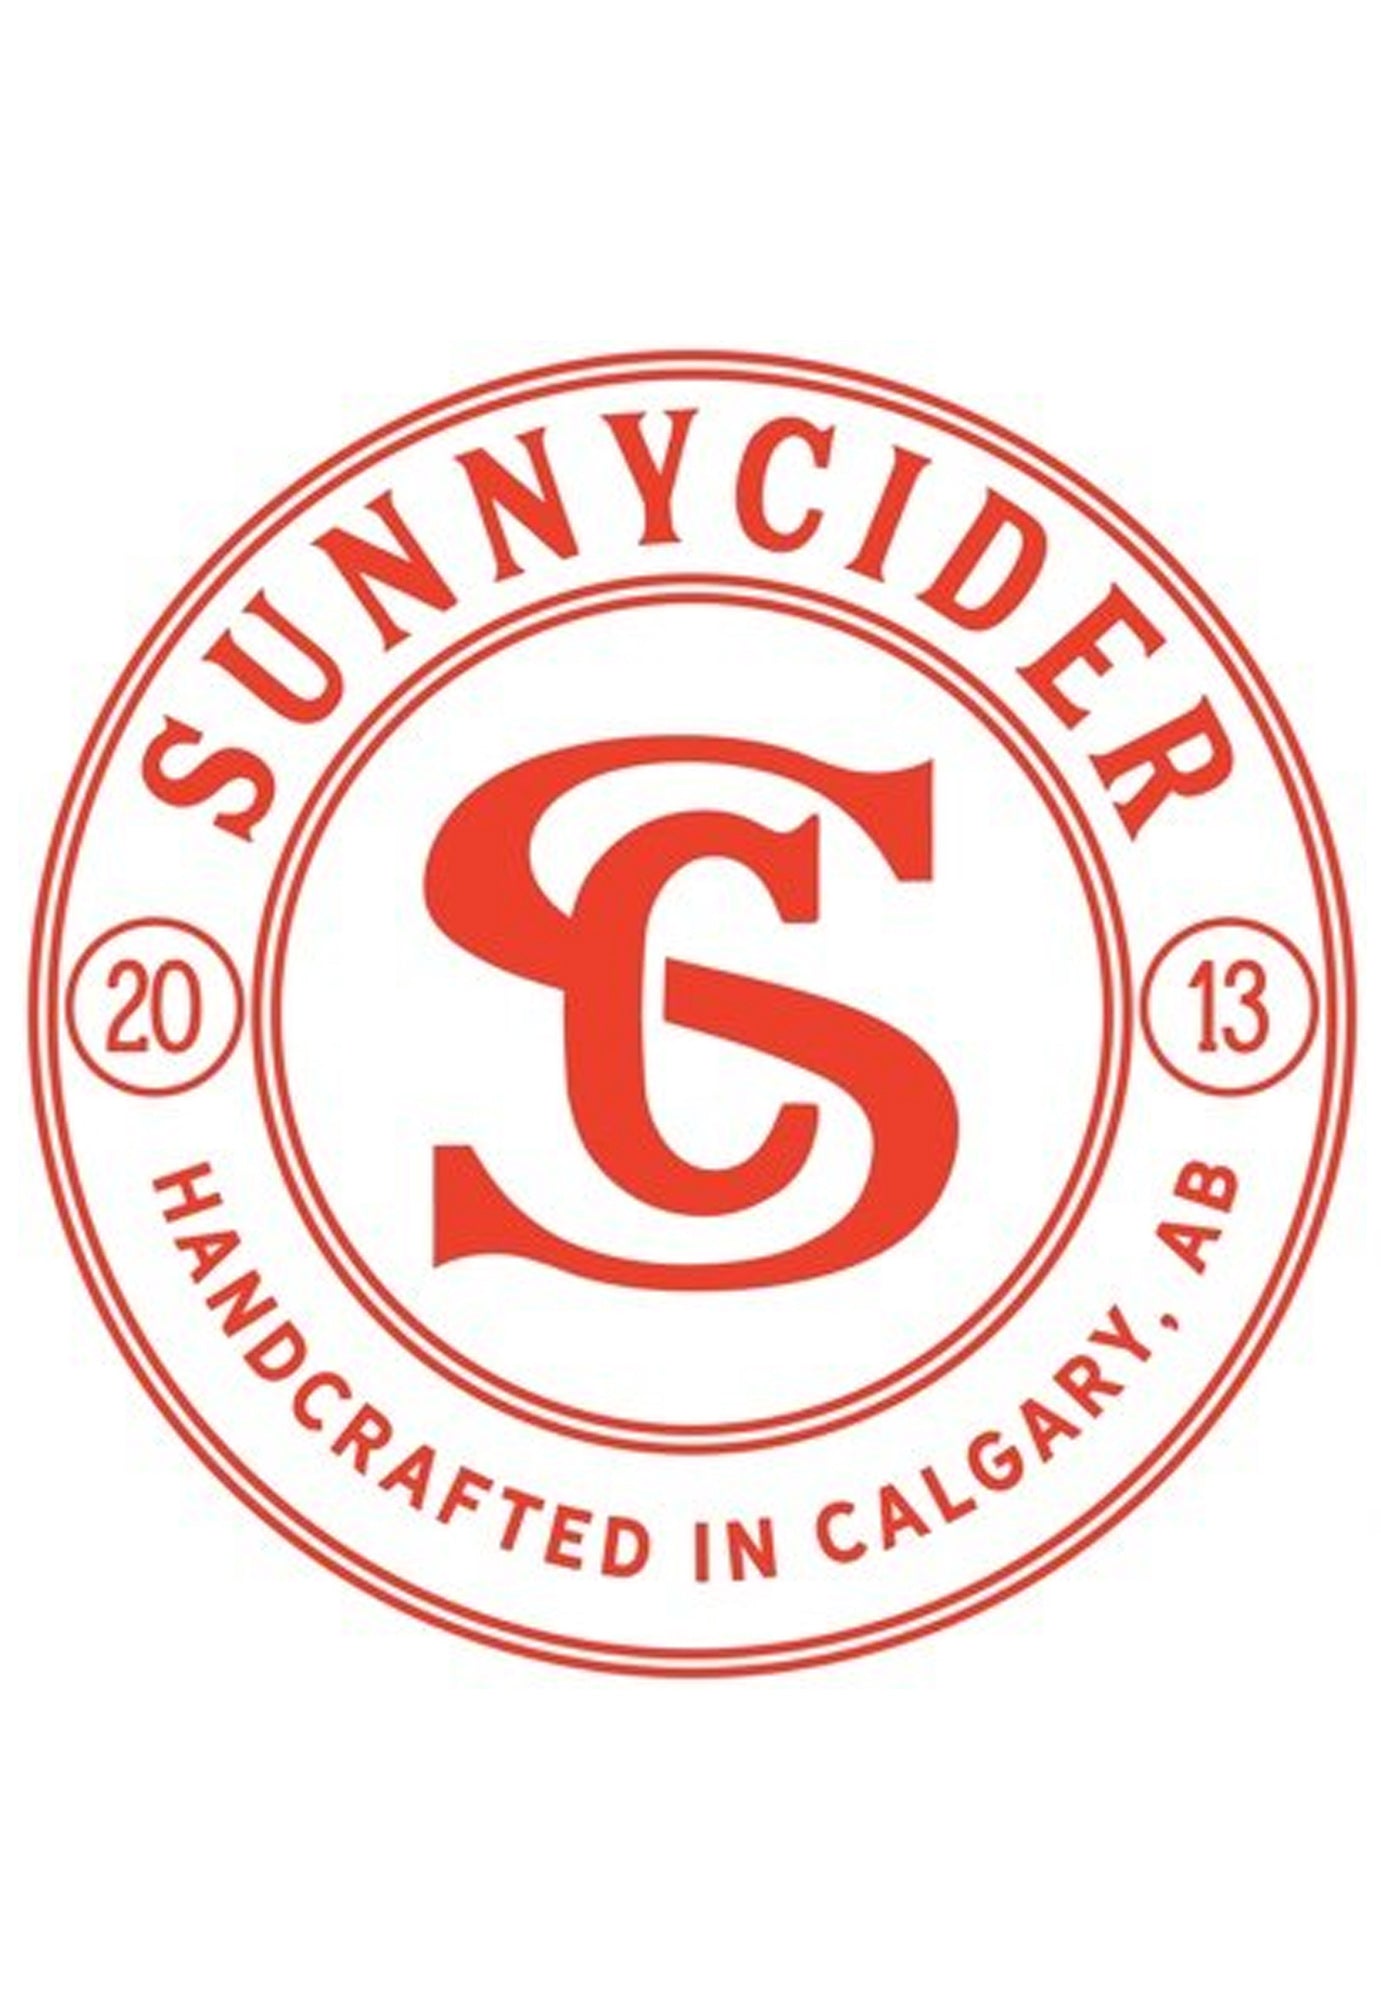 SunnyCider Apple Cider 473 ml - 4 Cans